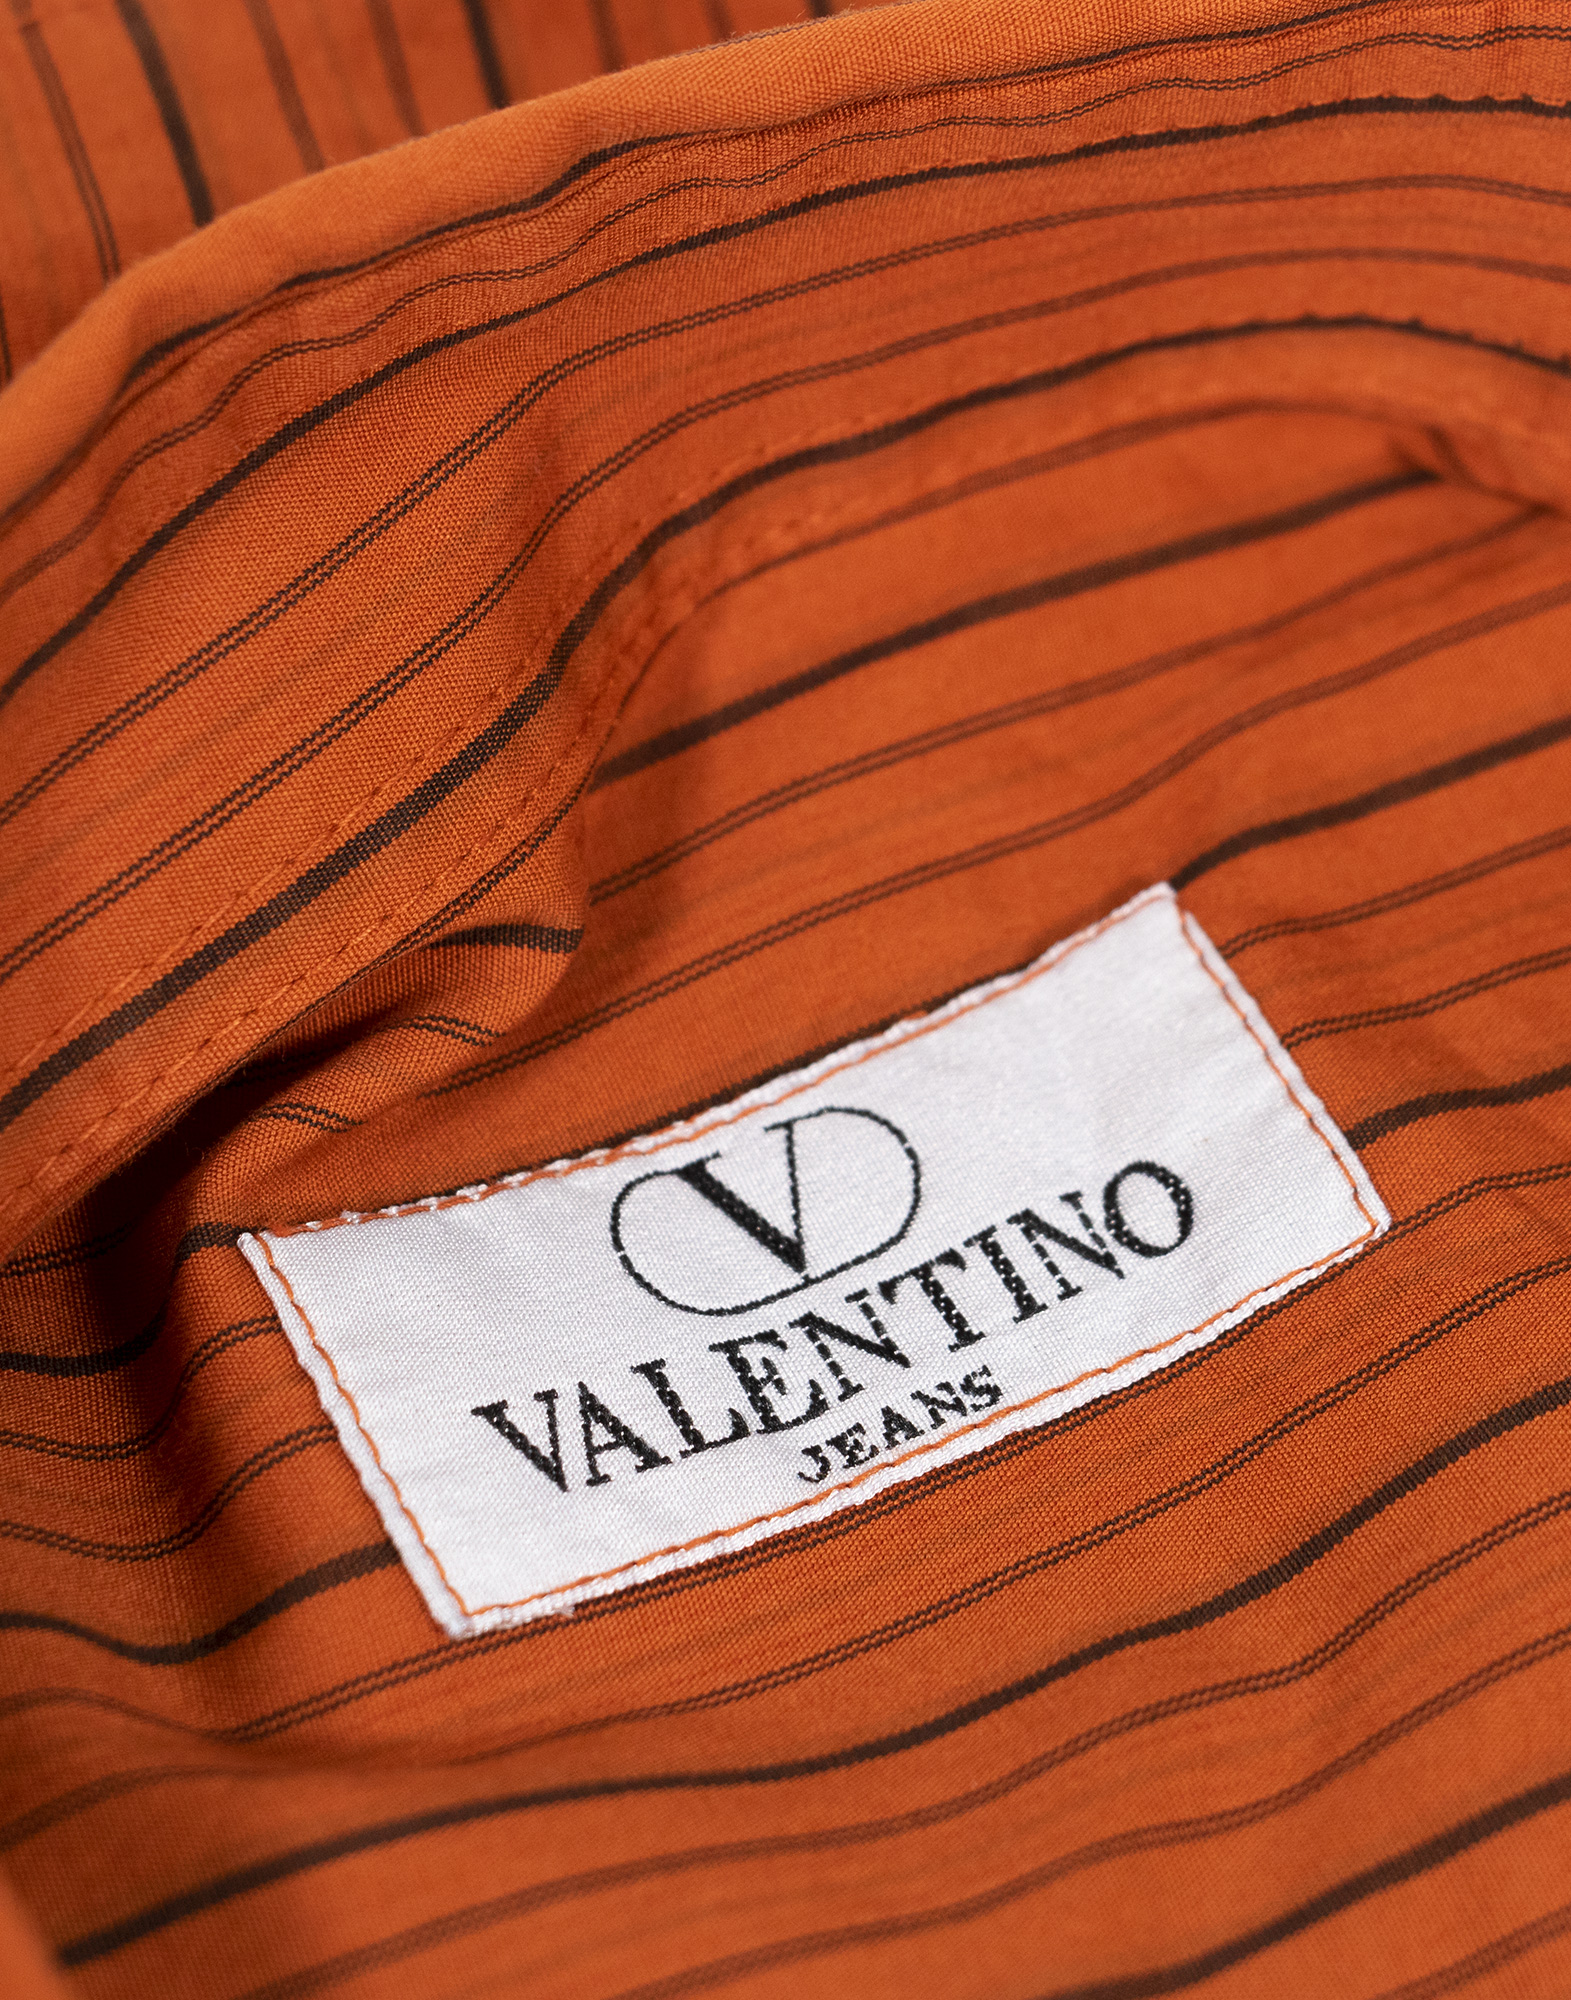 Valentino Jeans - Striped orange shirt